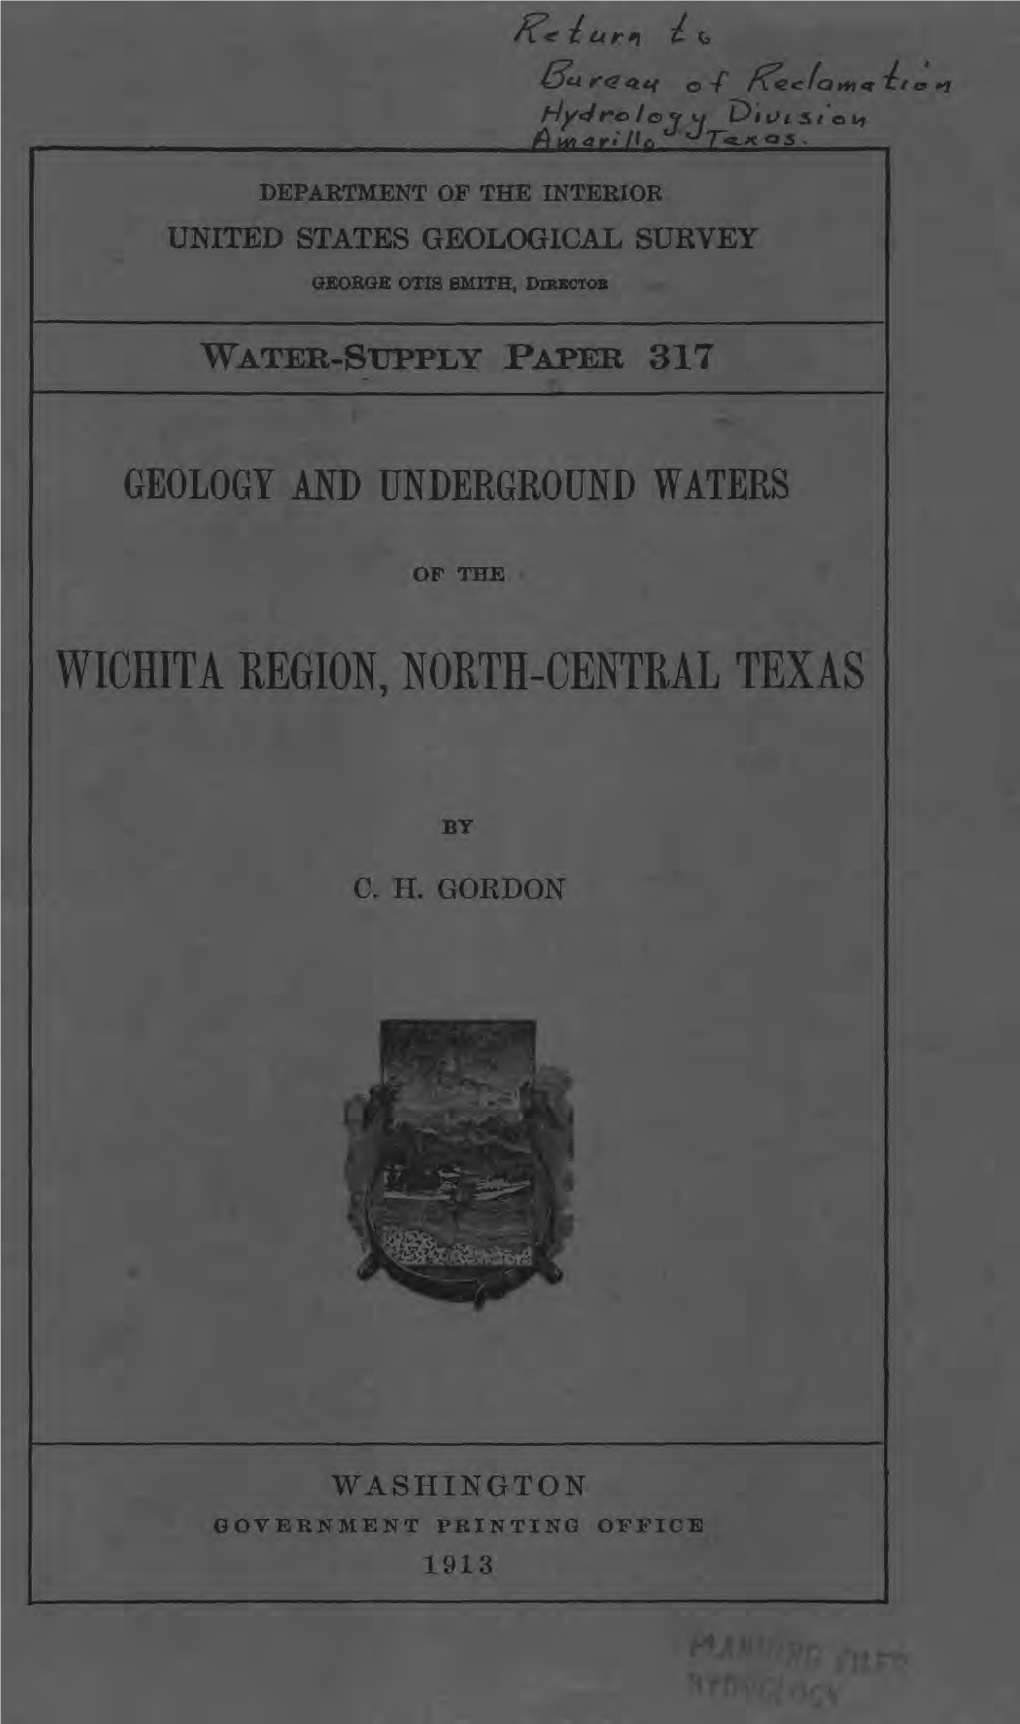 Wichita Region, North-Central Texas